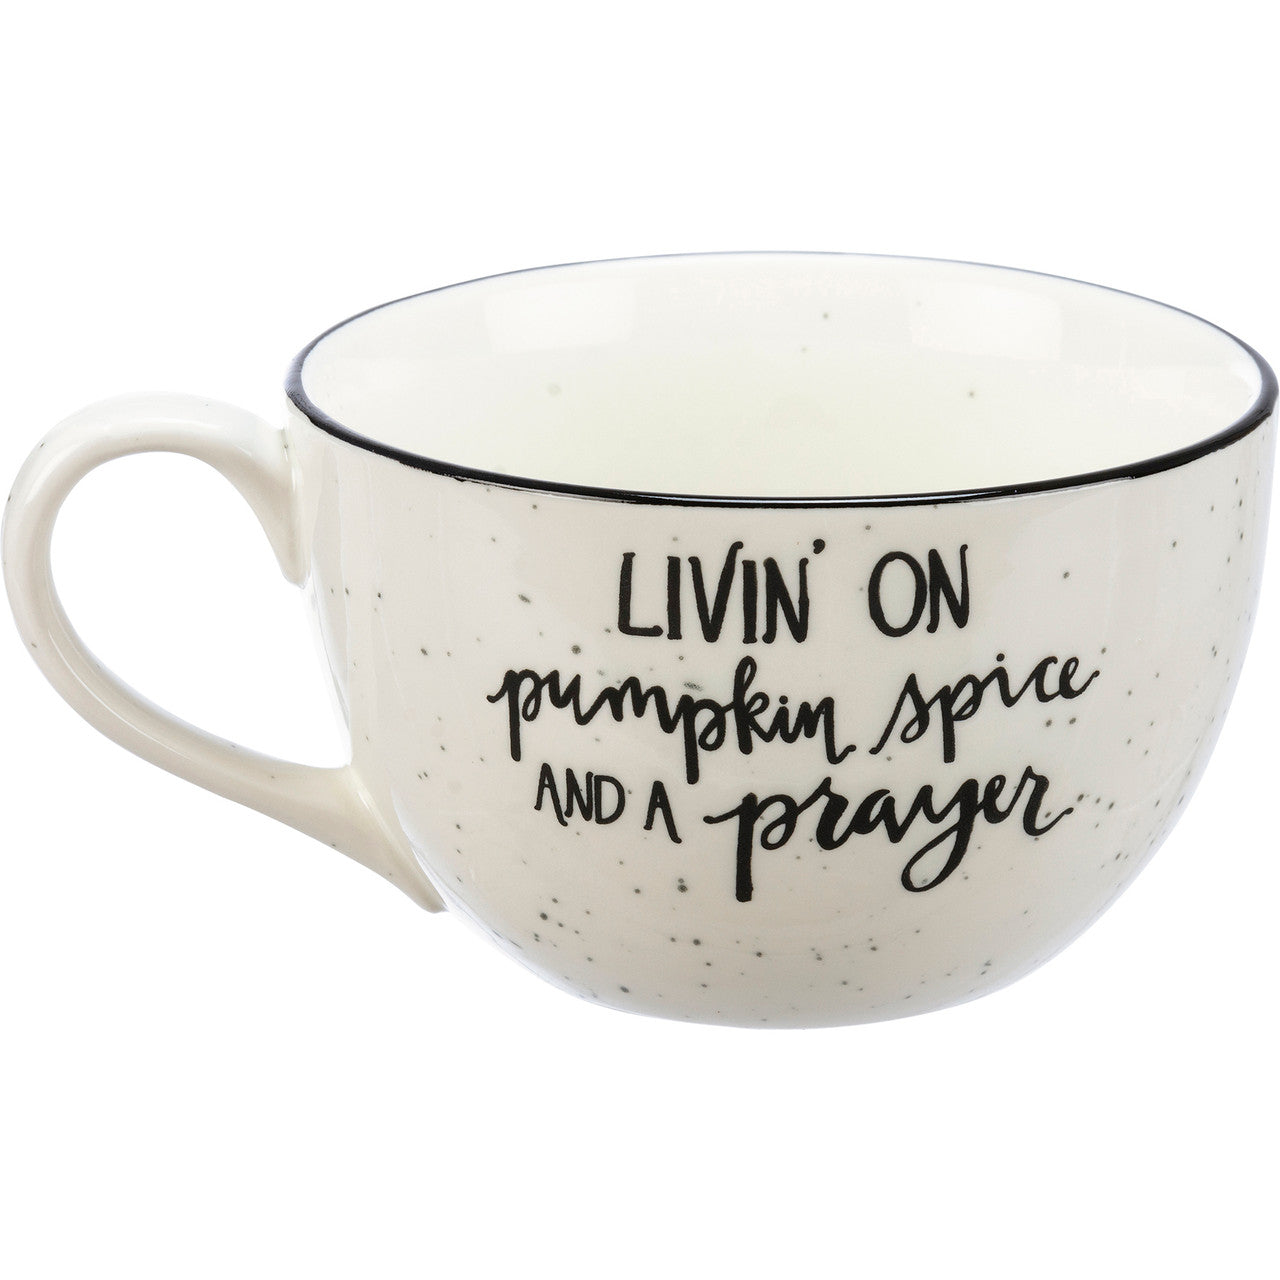 "Livin On Pumpkin Spice and a Prayer" mug set